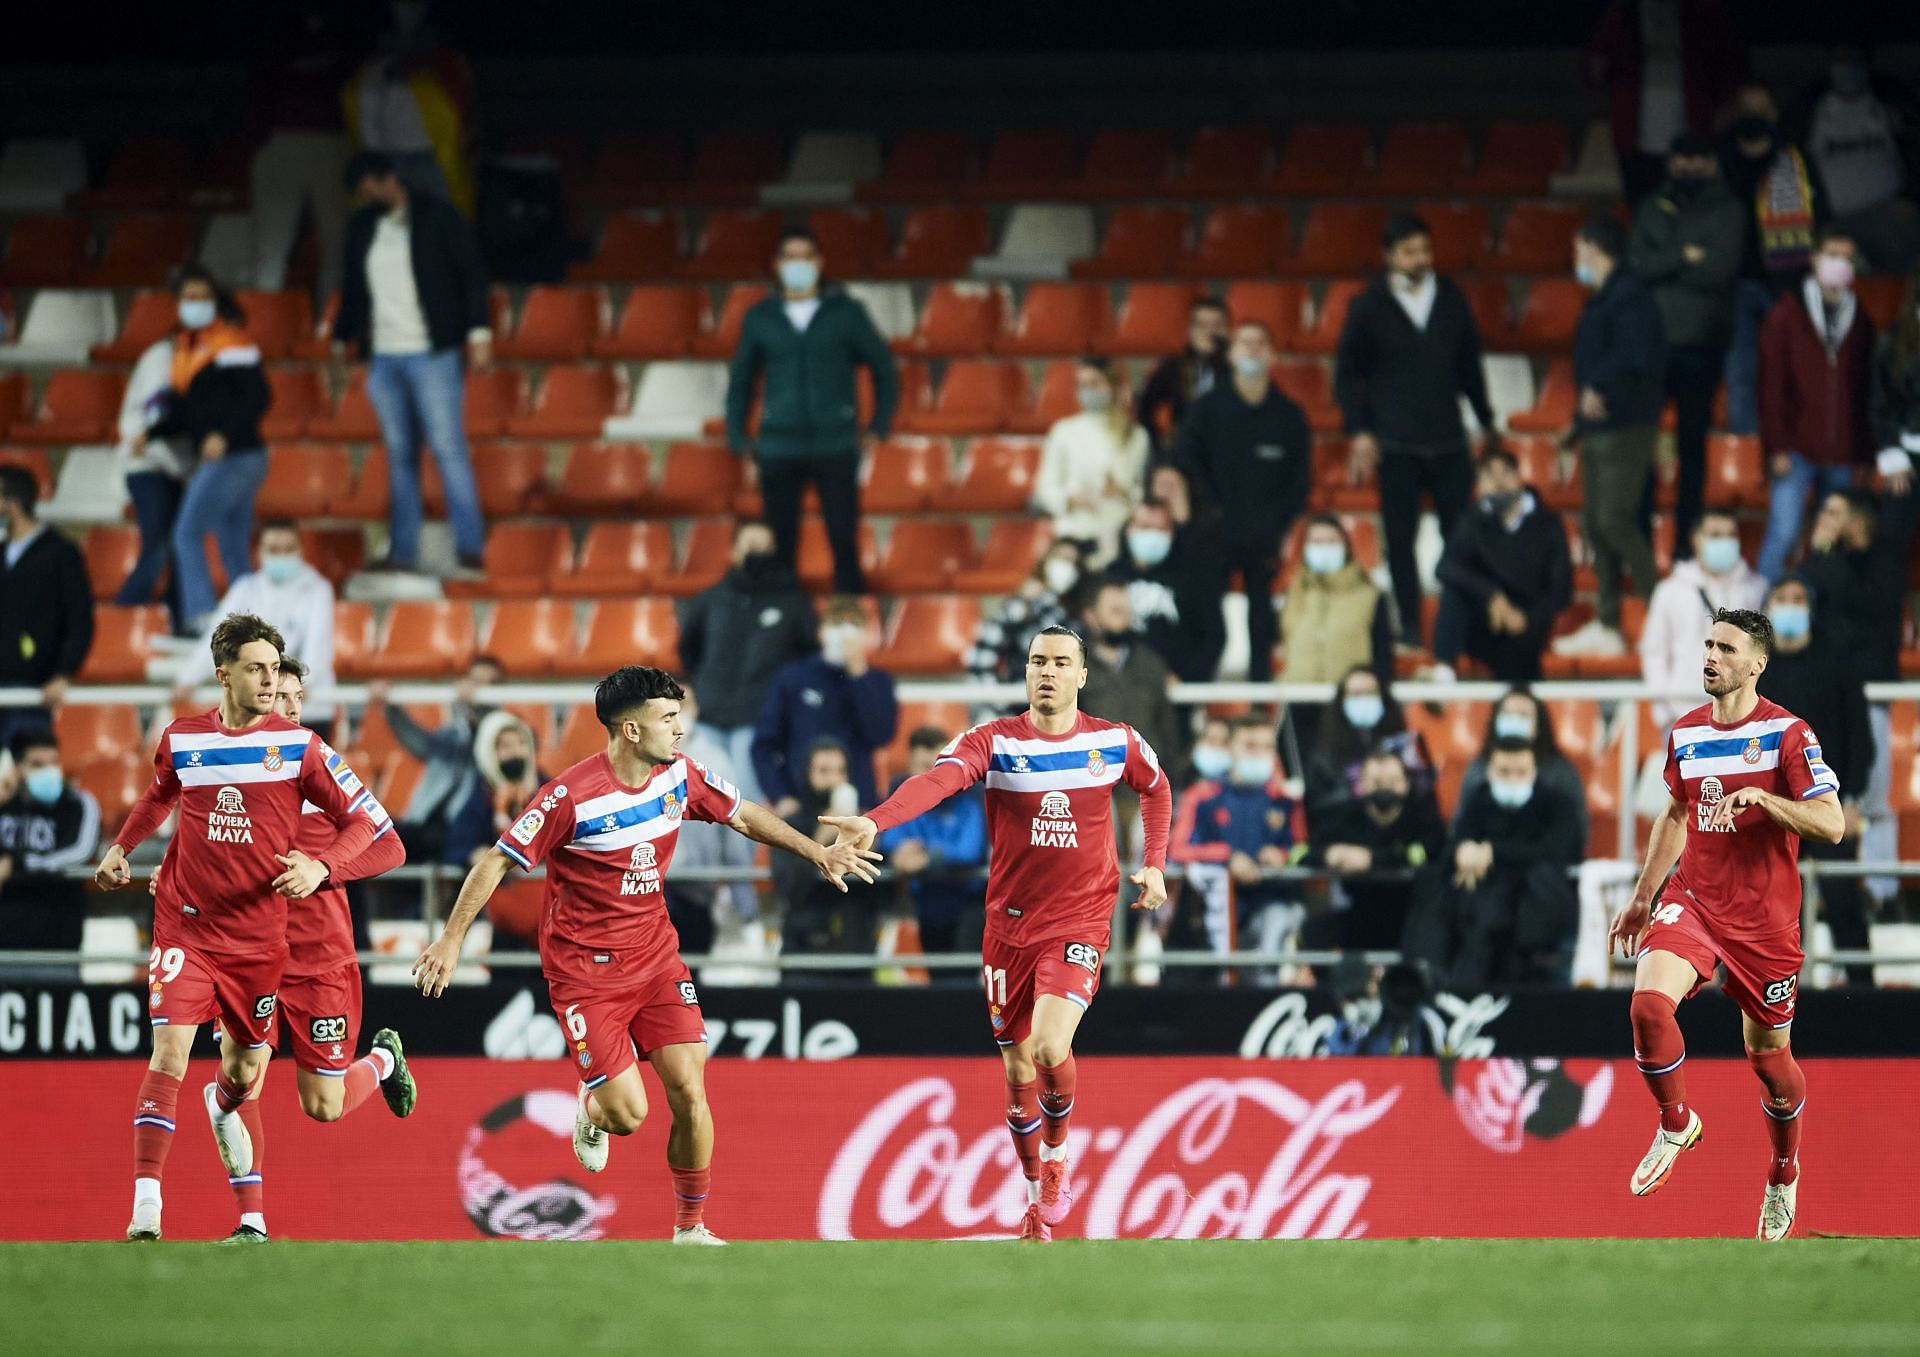 Espanyol face Mallorca in their Copa del Rey fixture on Saturday